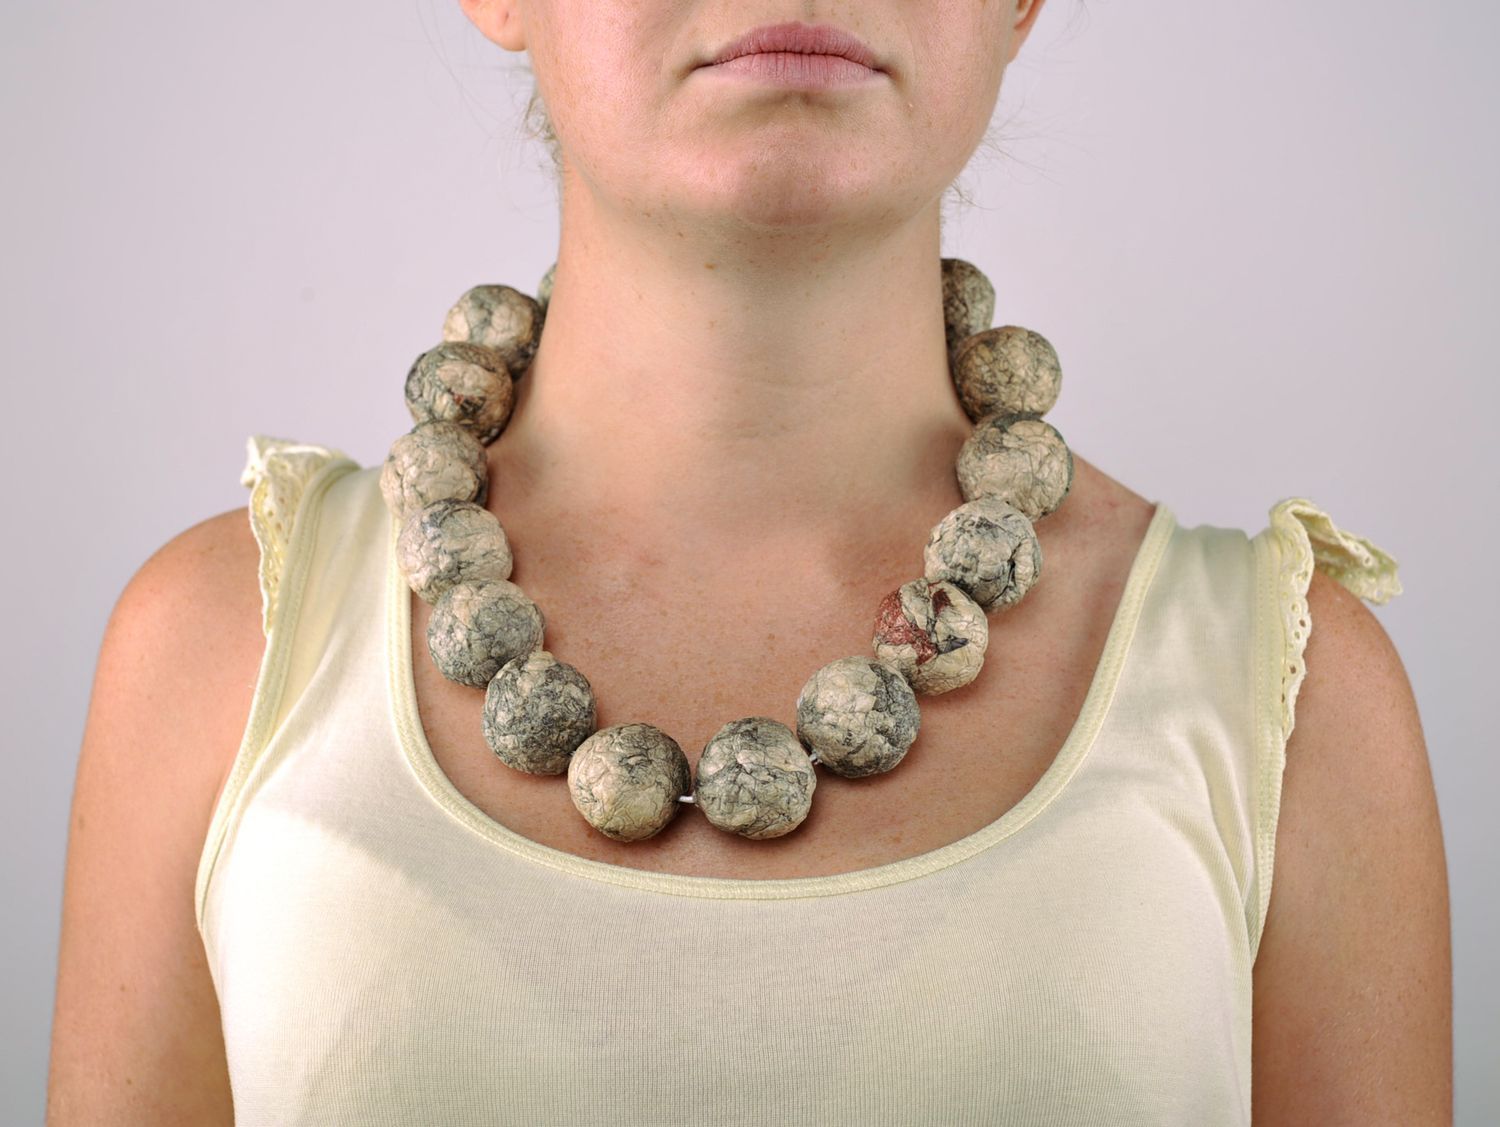 Bead necklace hand made using papier mache technique photo 4